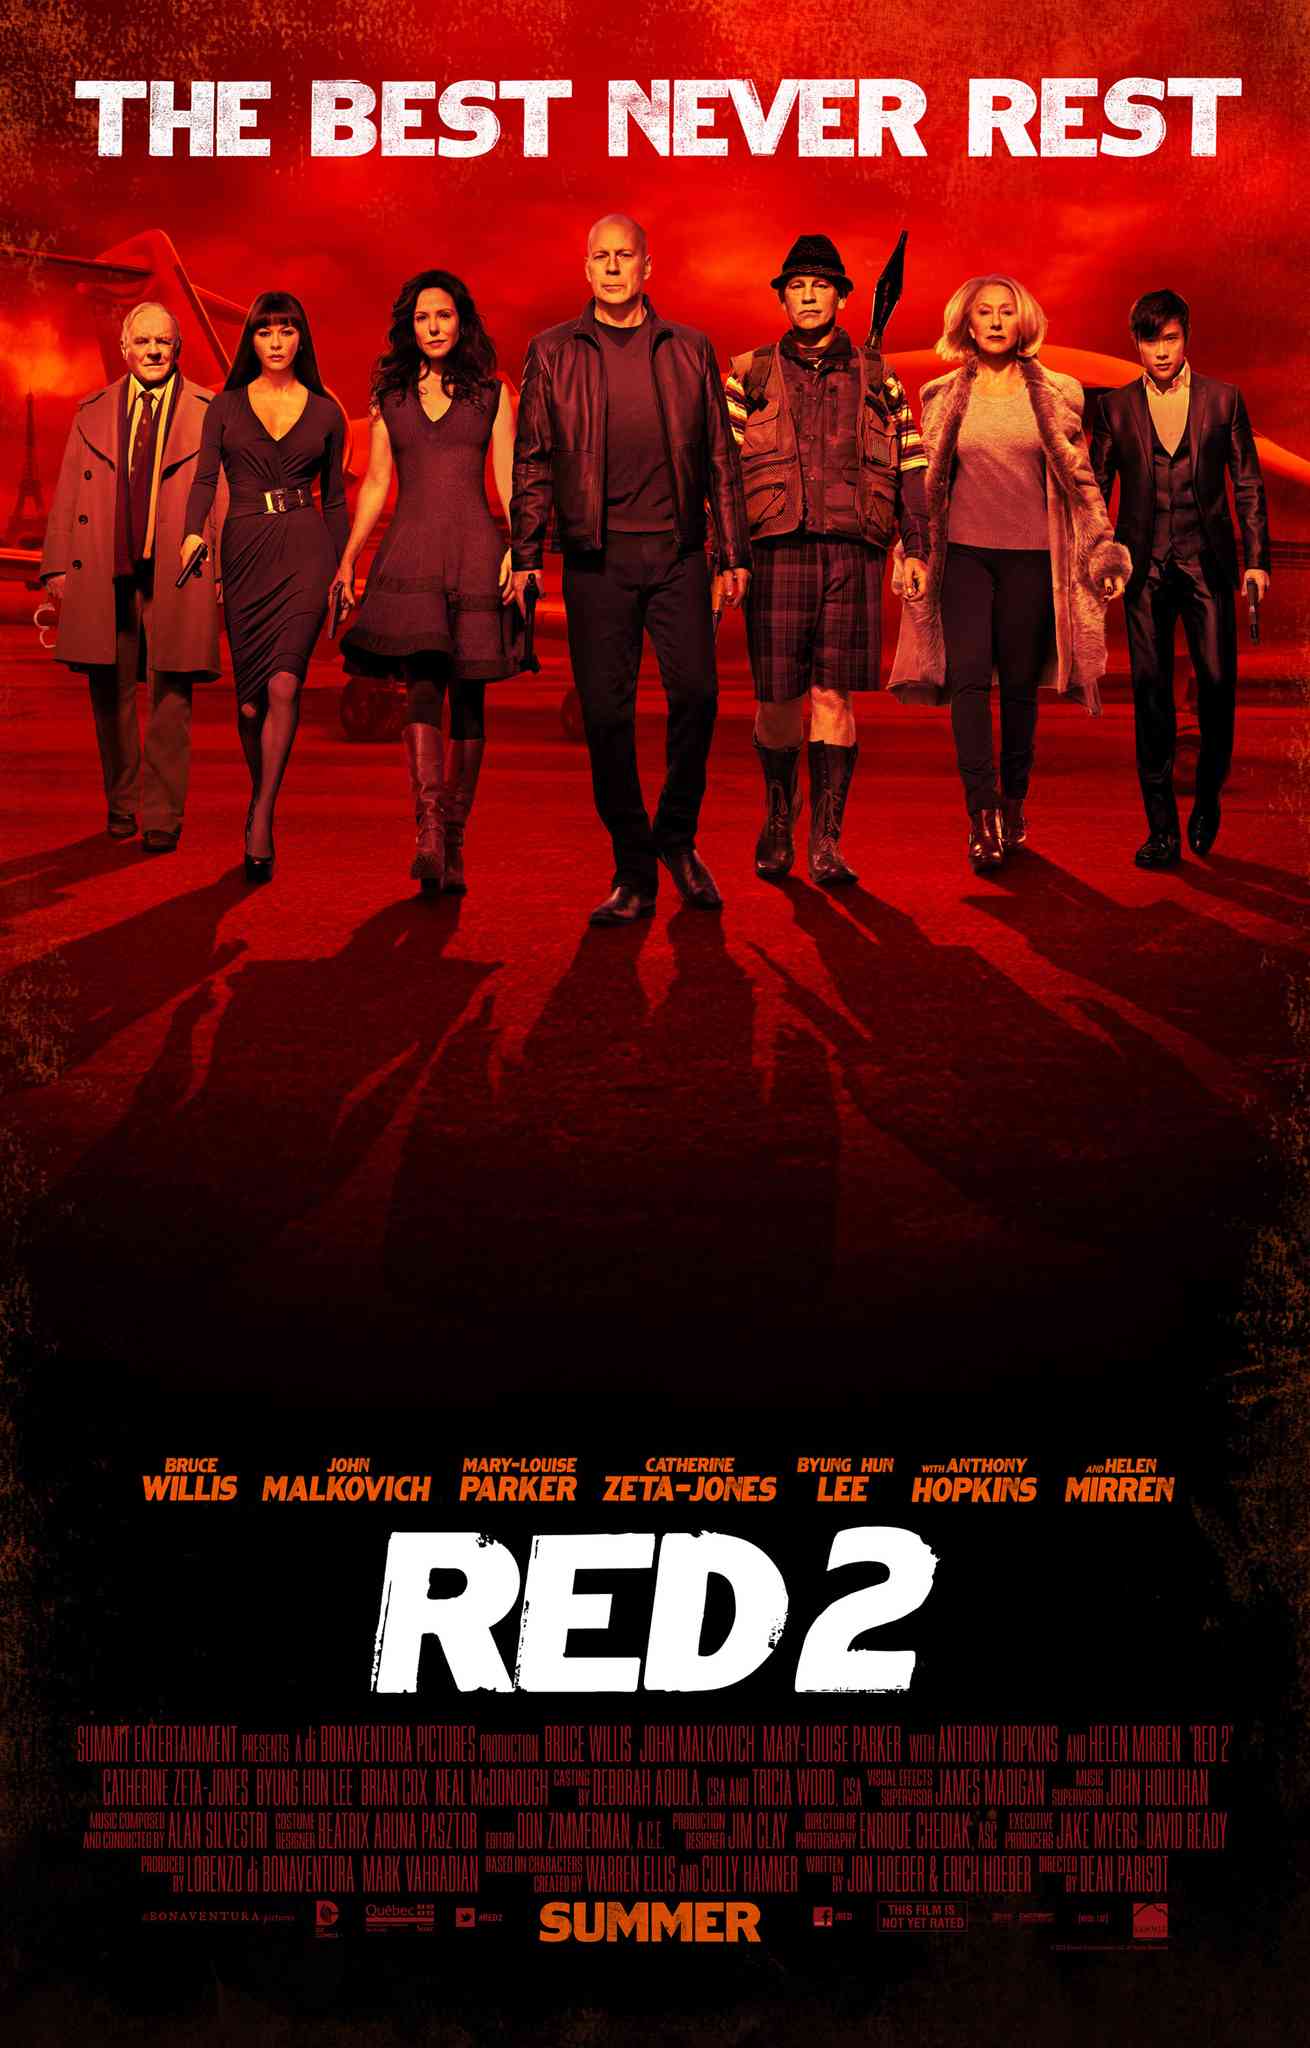 FULL MOVIE: Red 2 (2013)